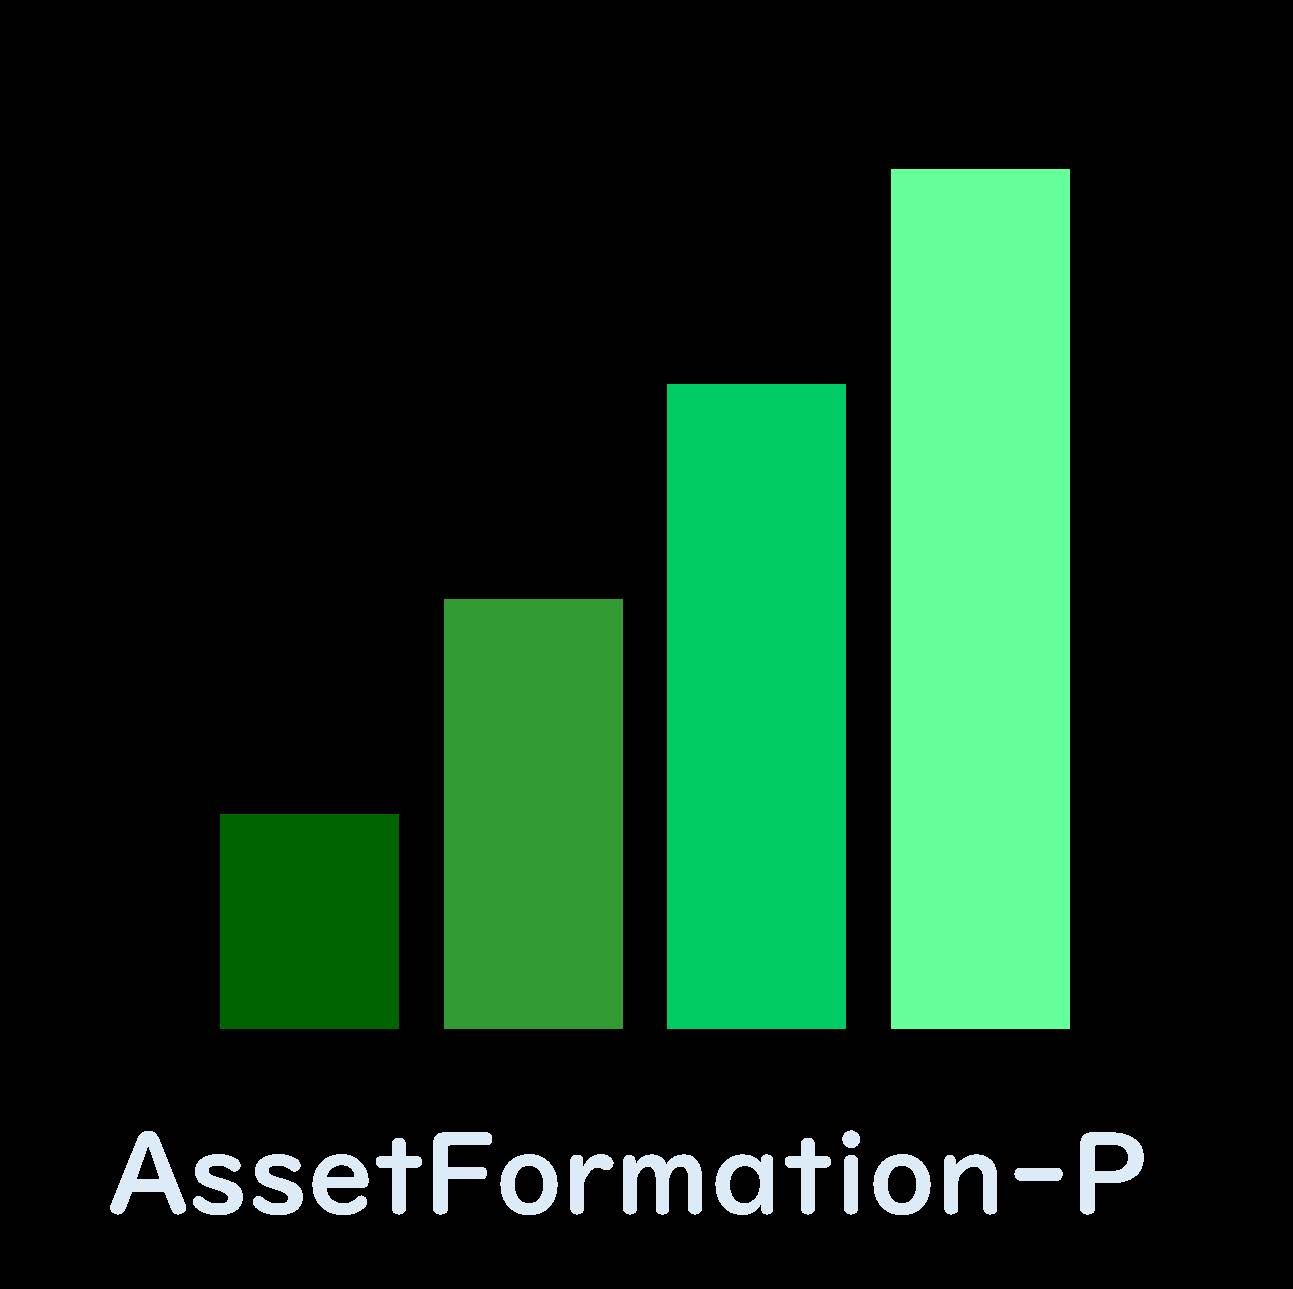 AssetFormation-P Auto Trading